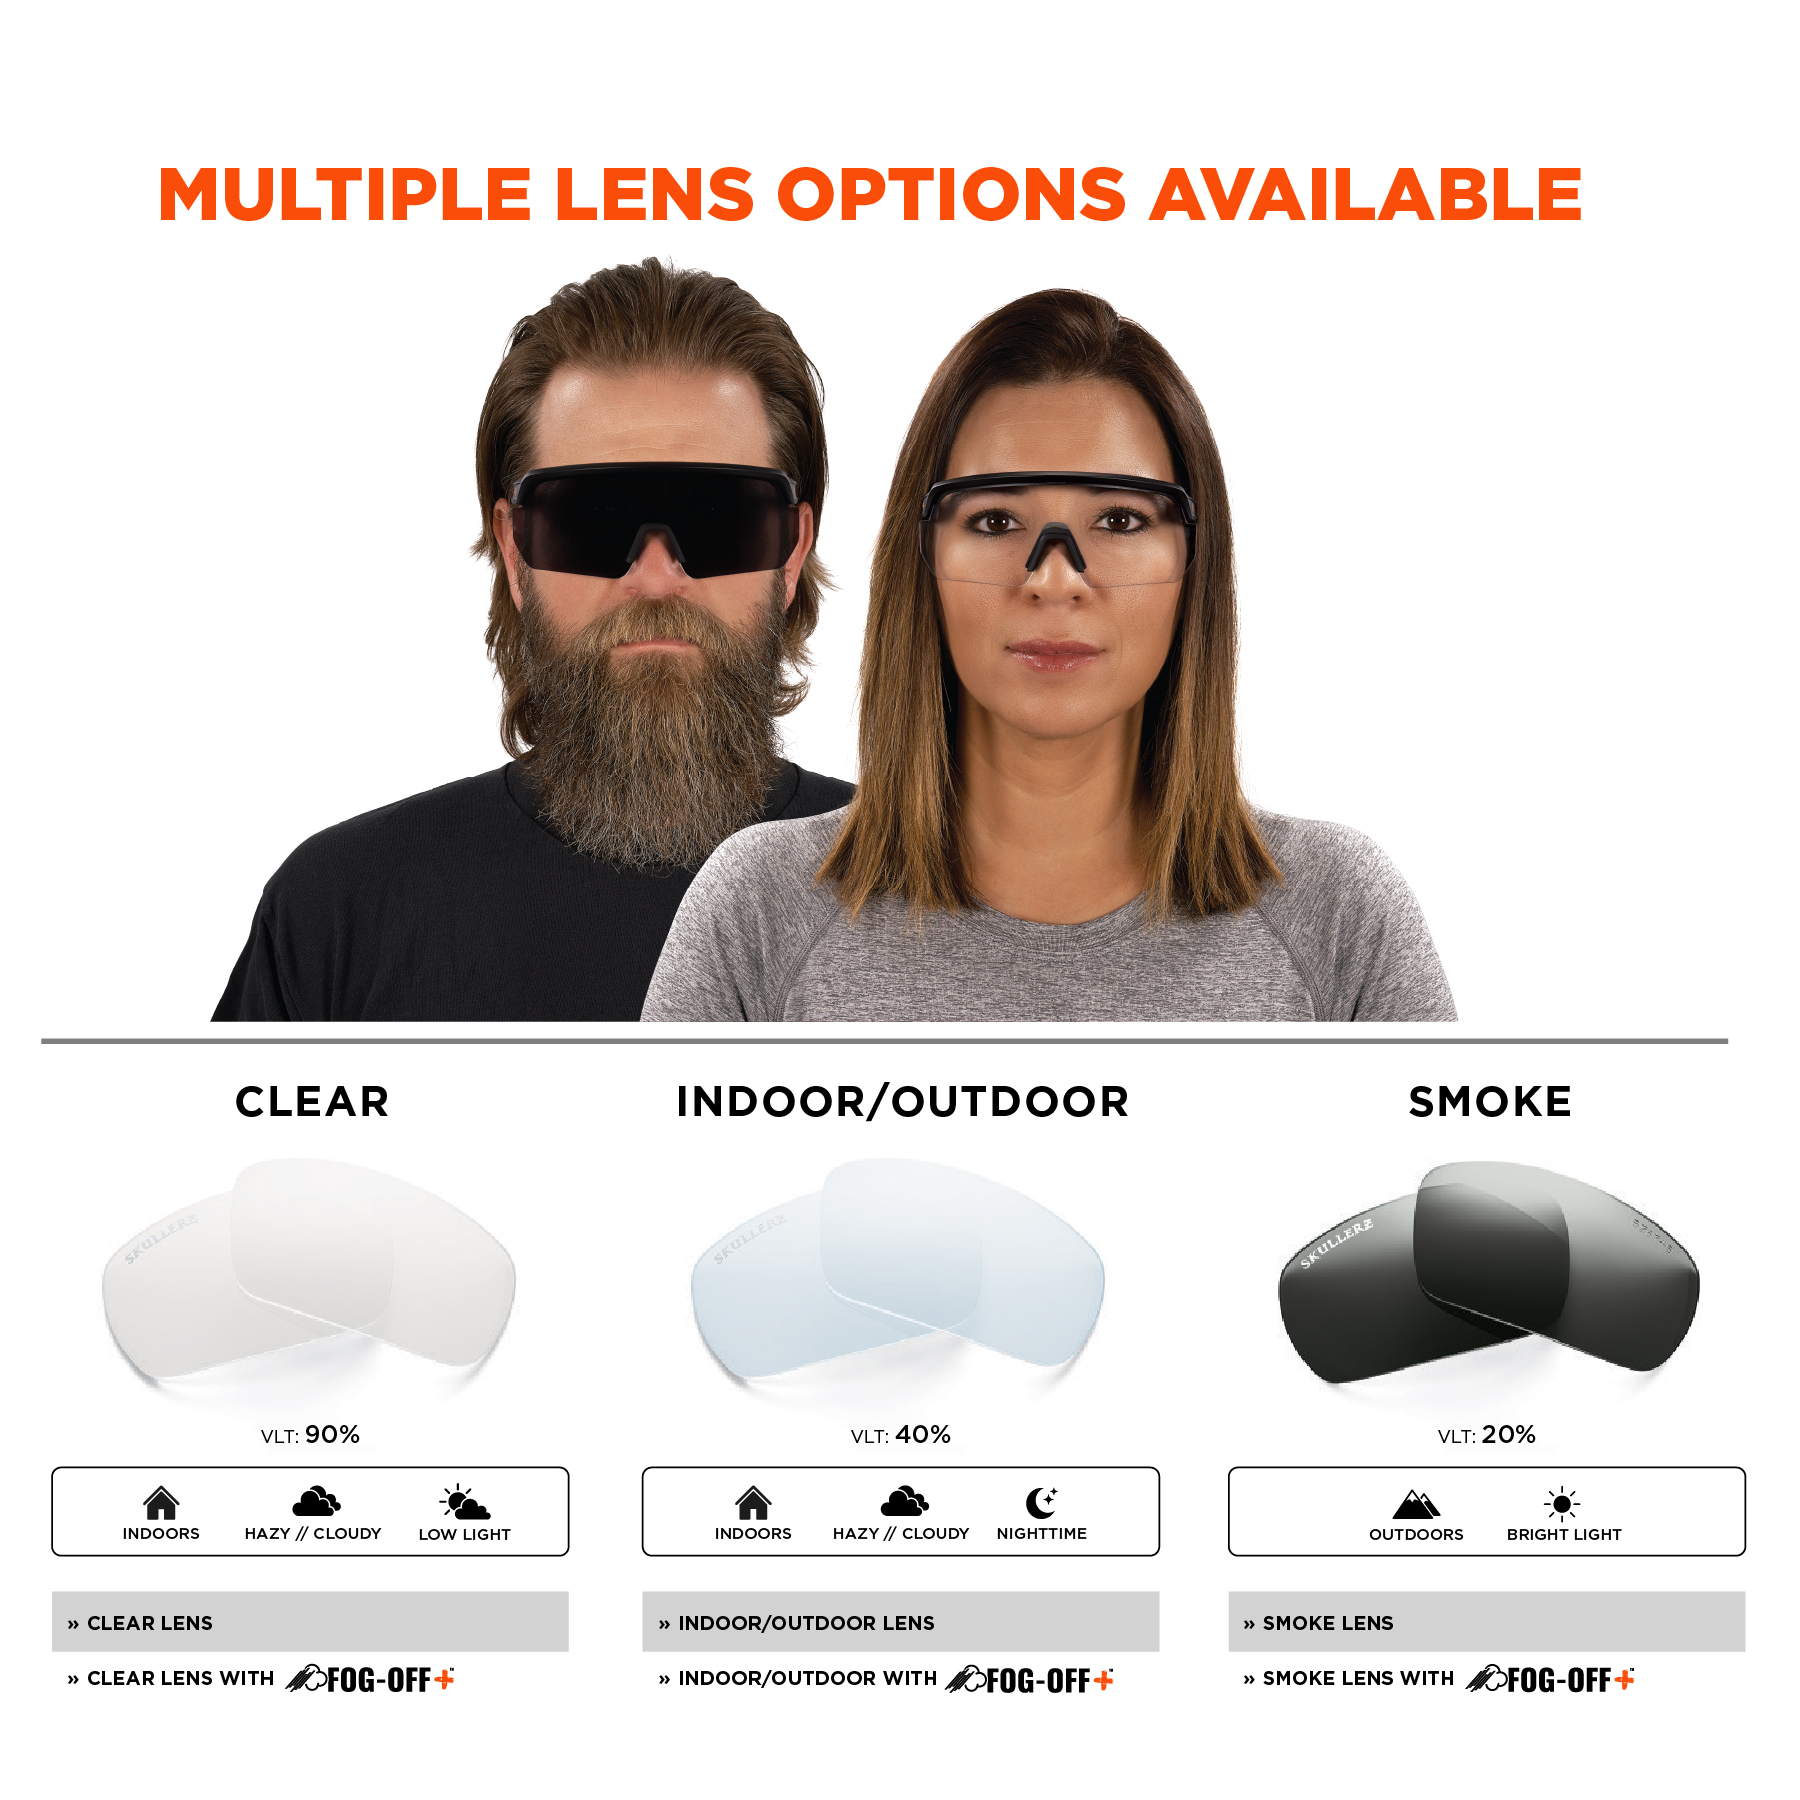 Official Oakley Standard Issue Double Edge Prizm Sapphire Polarized Lenses,  Grey Smoke Frame Sunglasses | Oakley Standard Issue